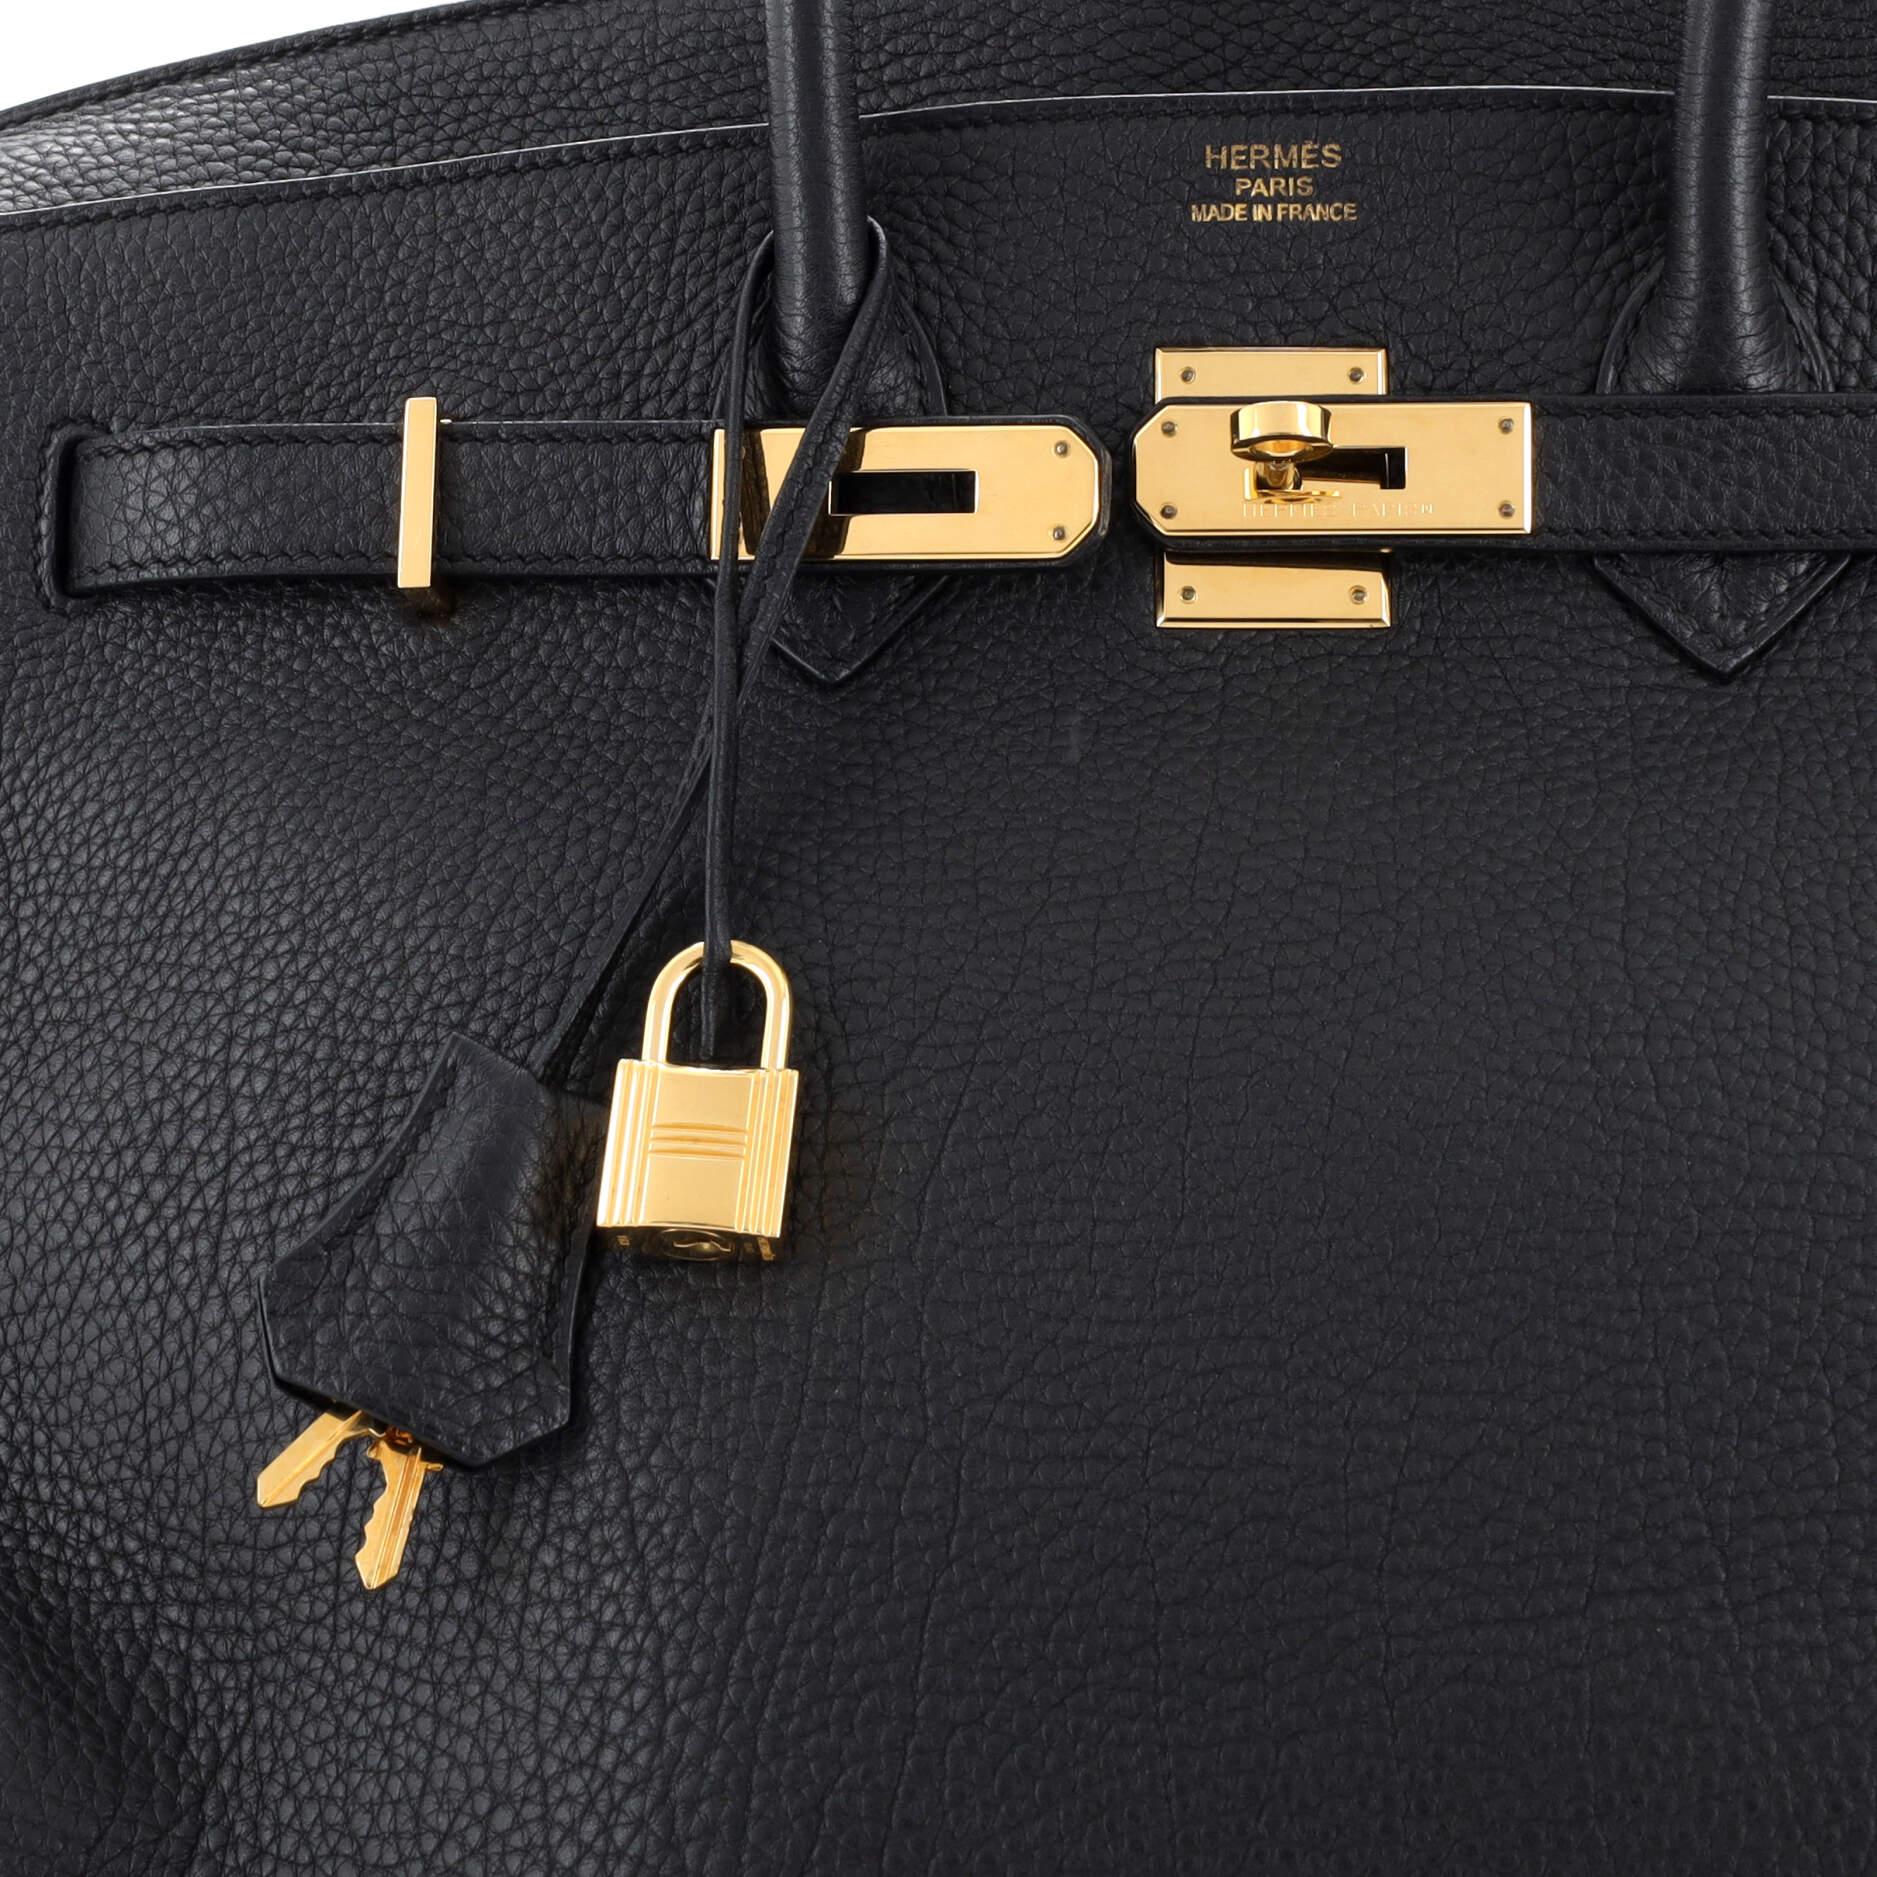 Hermes Birkin Handbag Noir Fjord with Gold Hardware 35 1